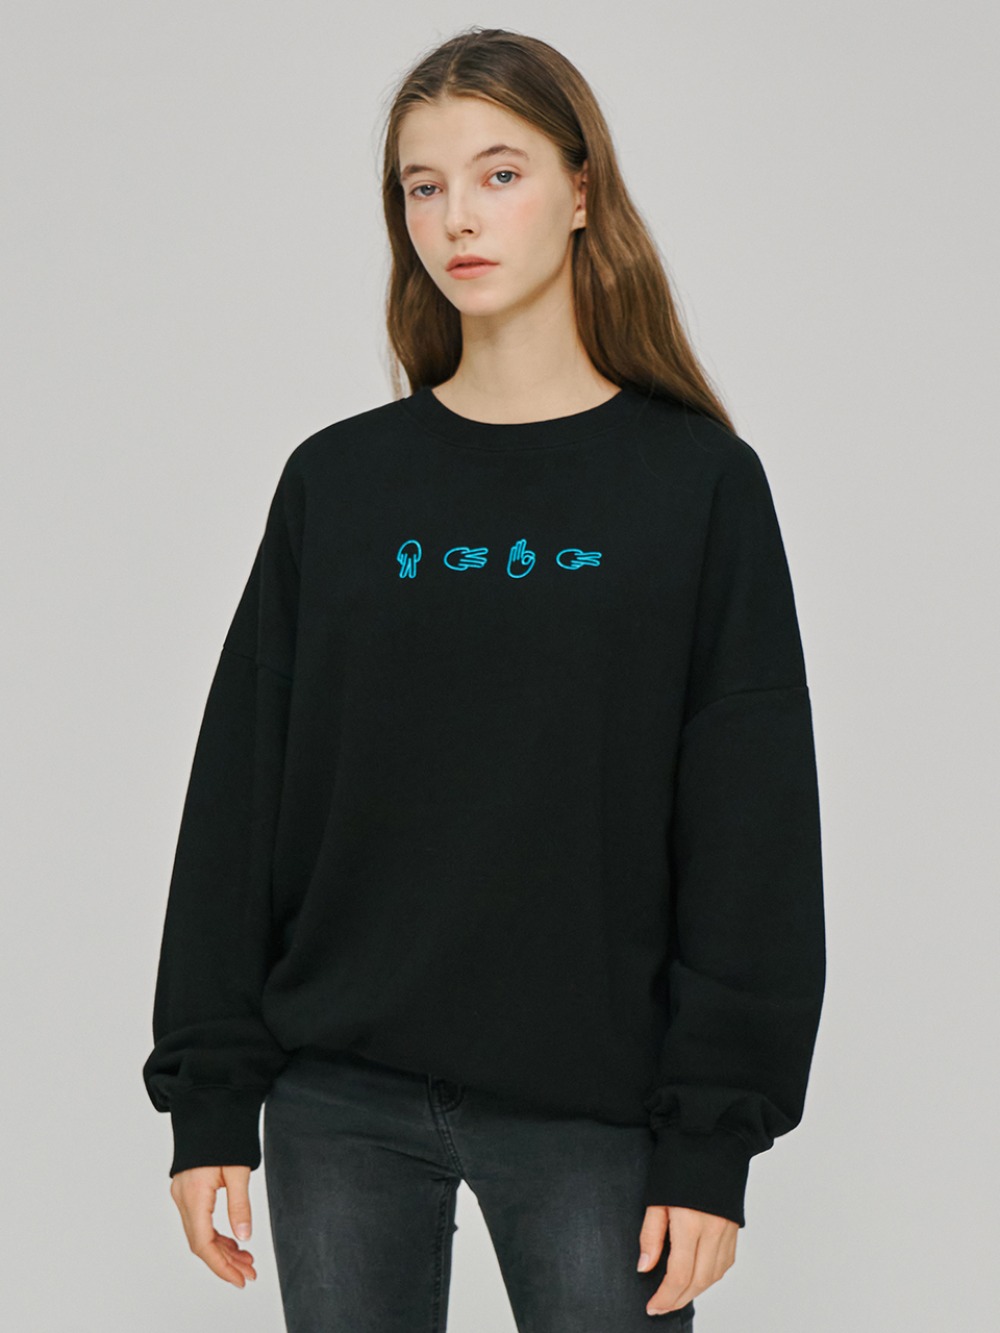 Sign Language Embroidery Sweatshirt Black